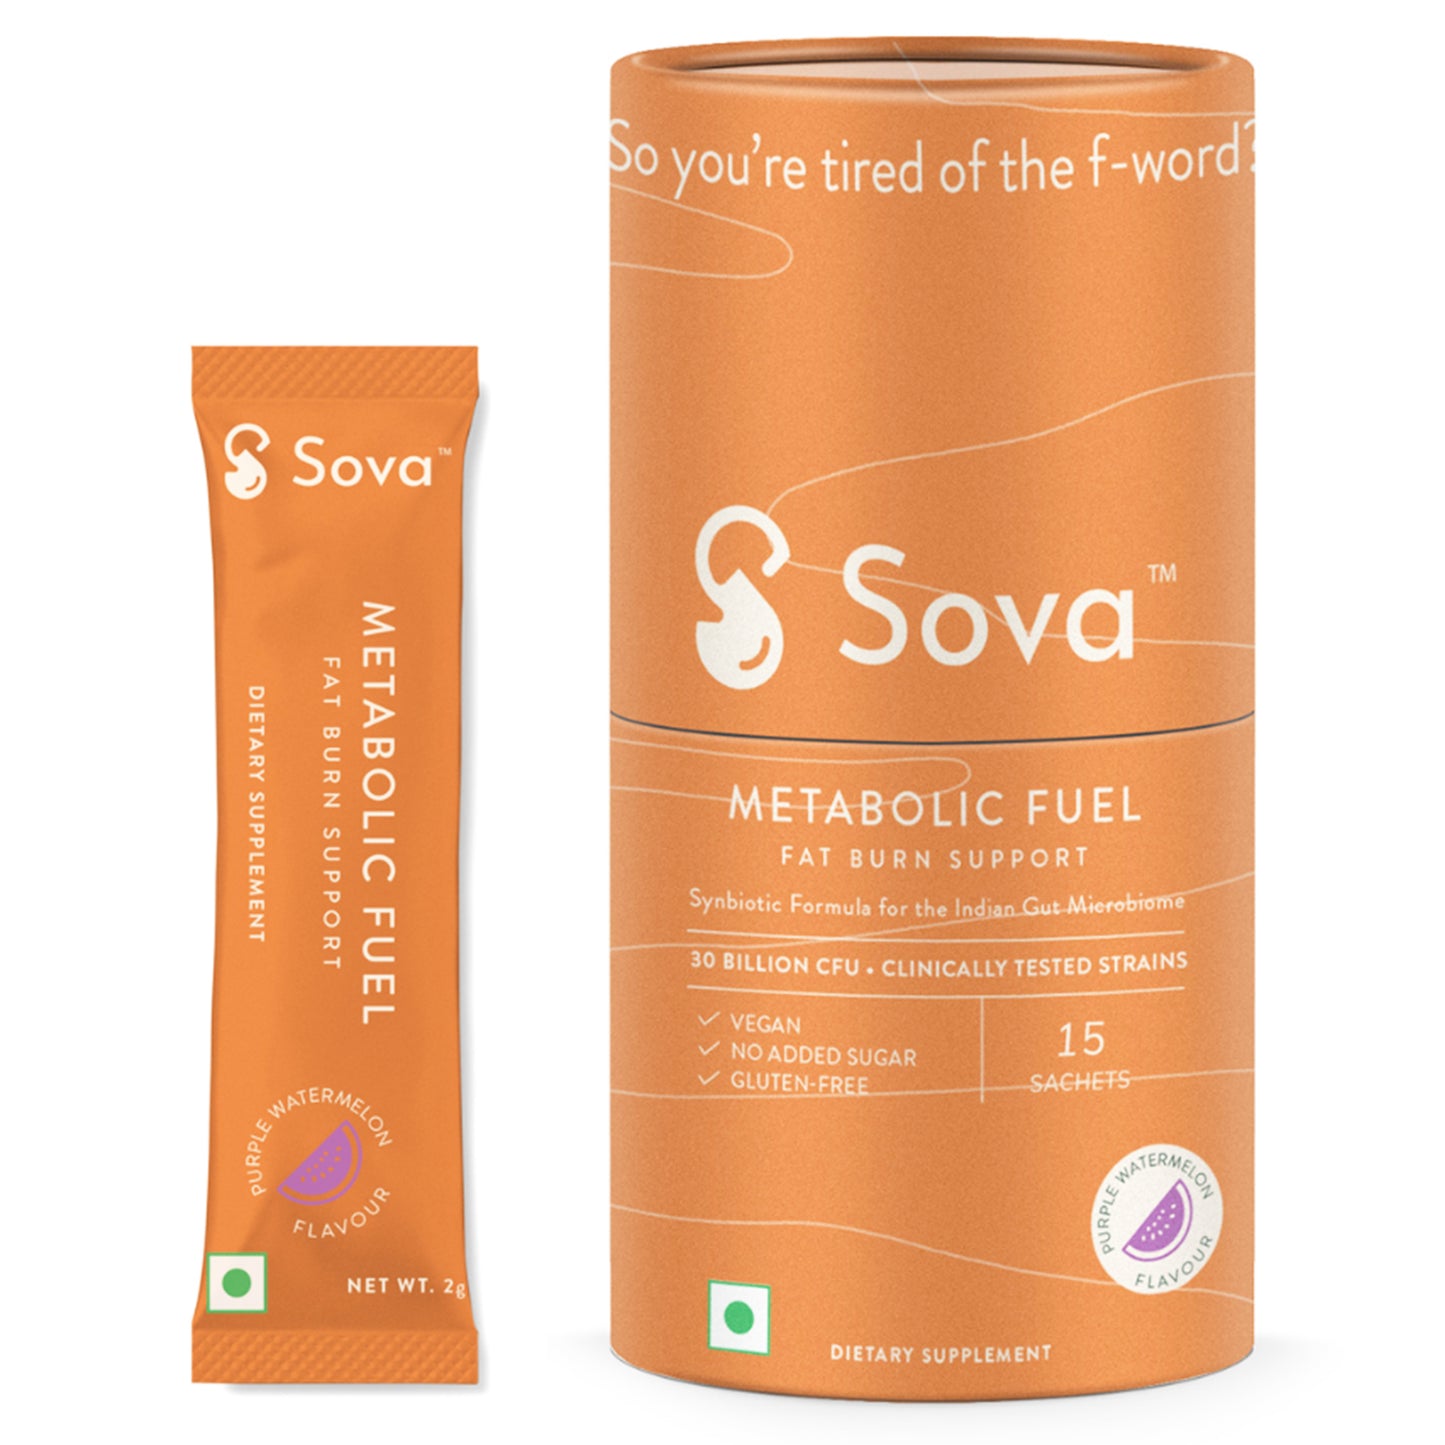 Sova 代谢燃料脂肪燃烧支持西瓜味